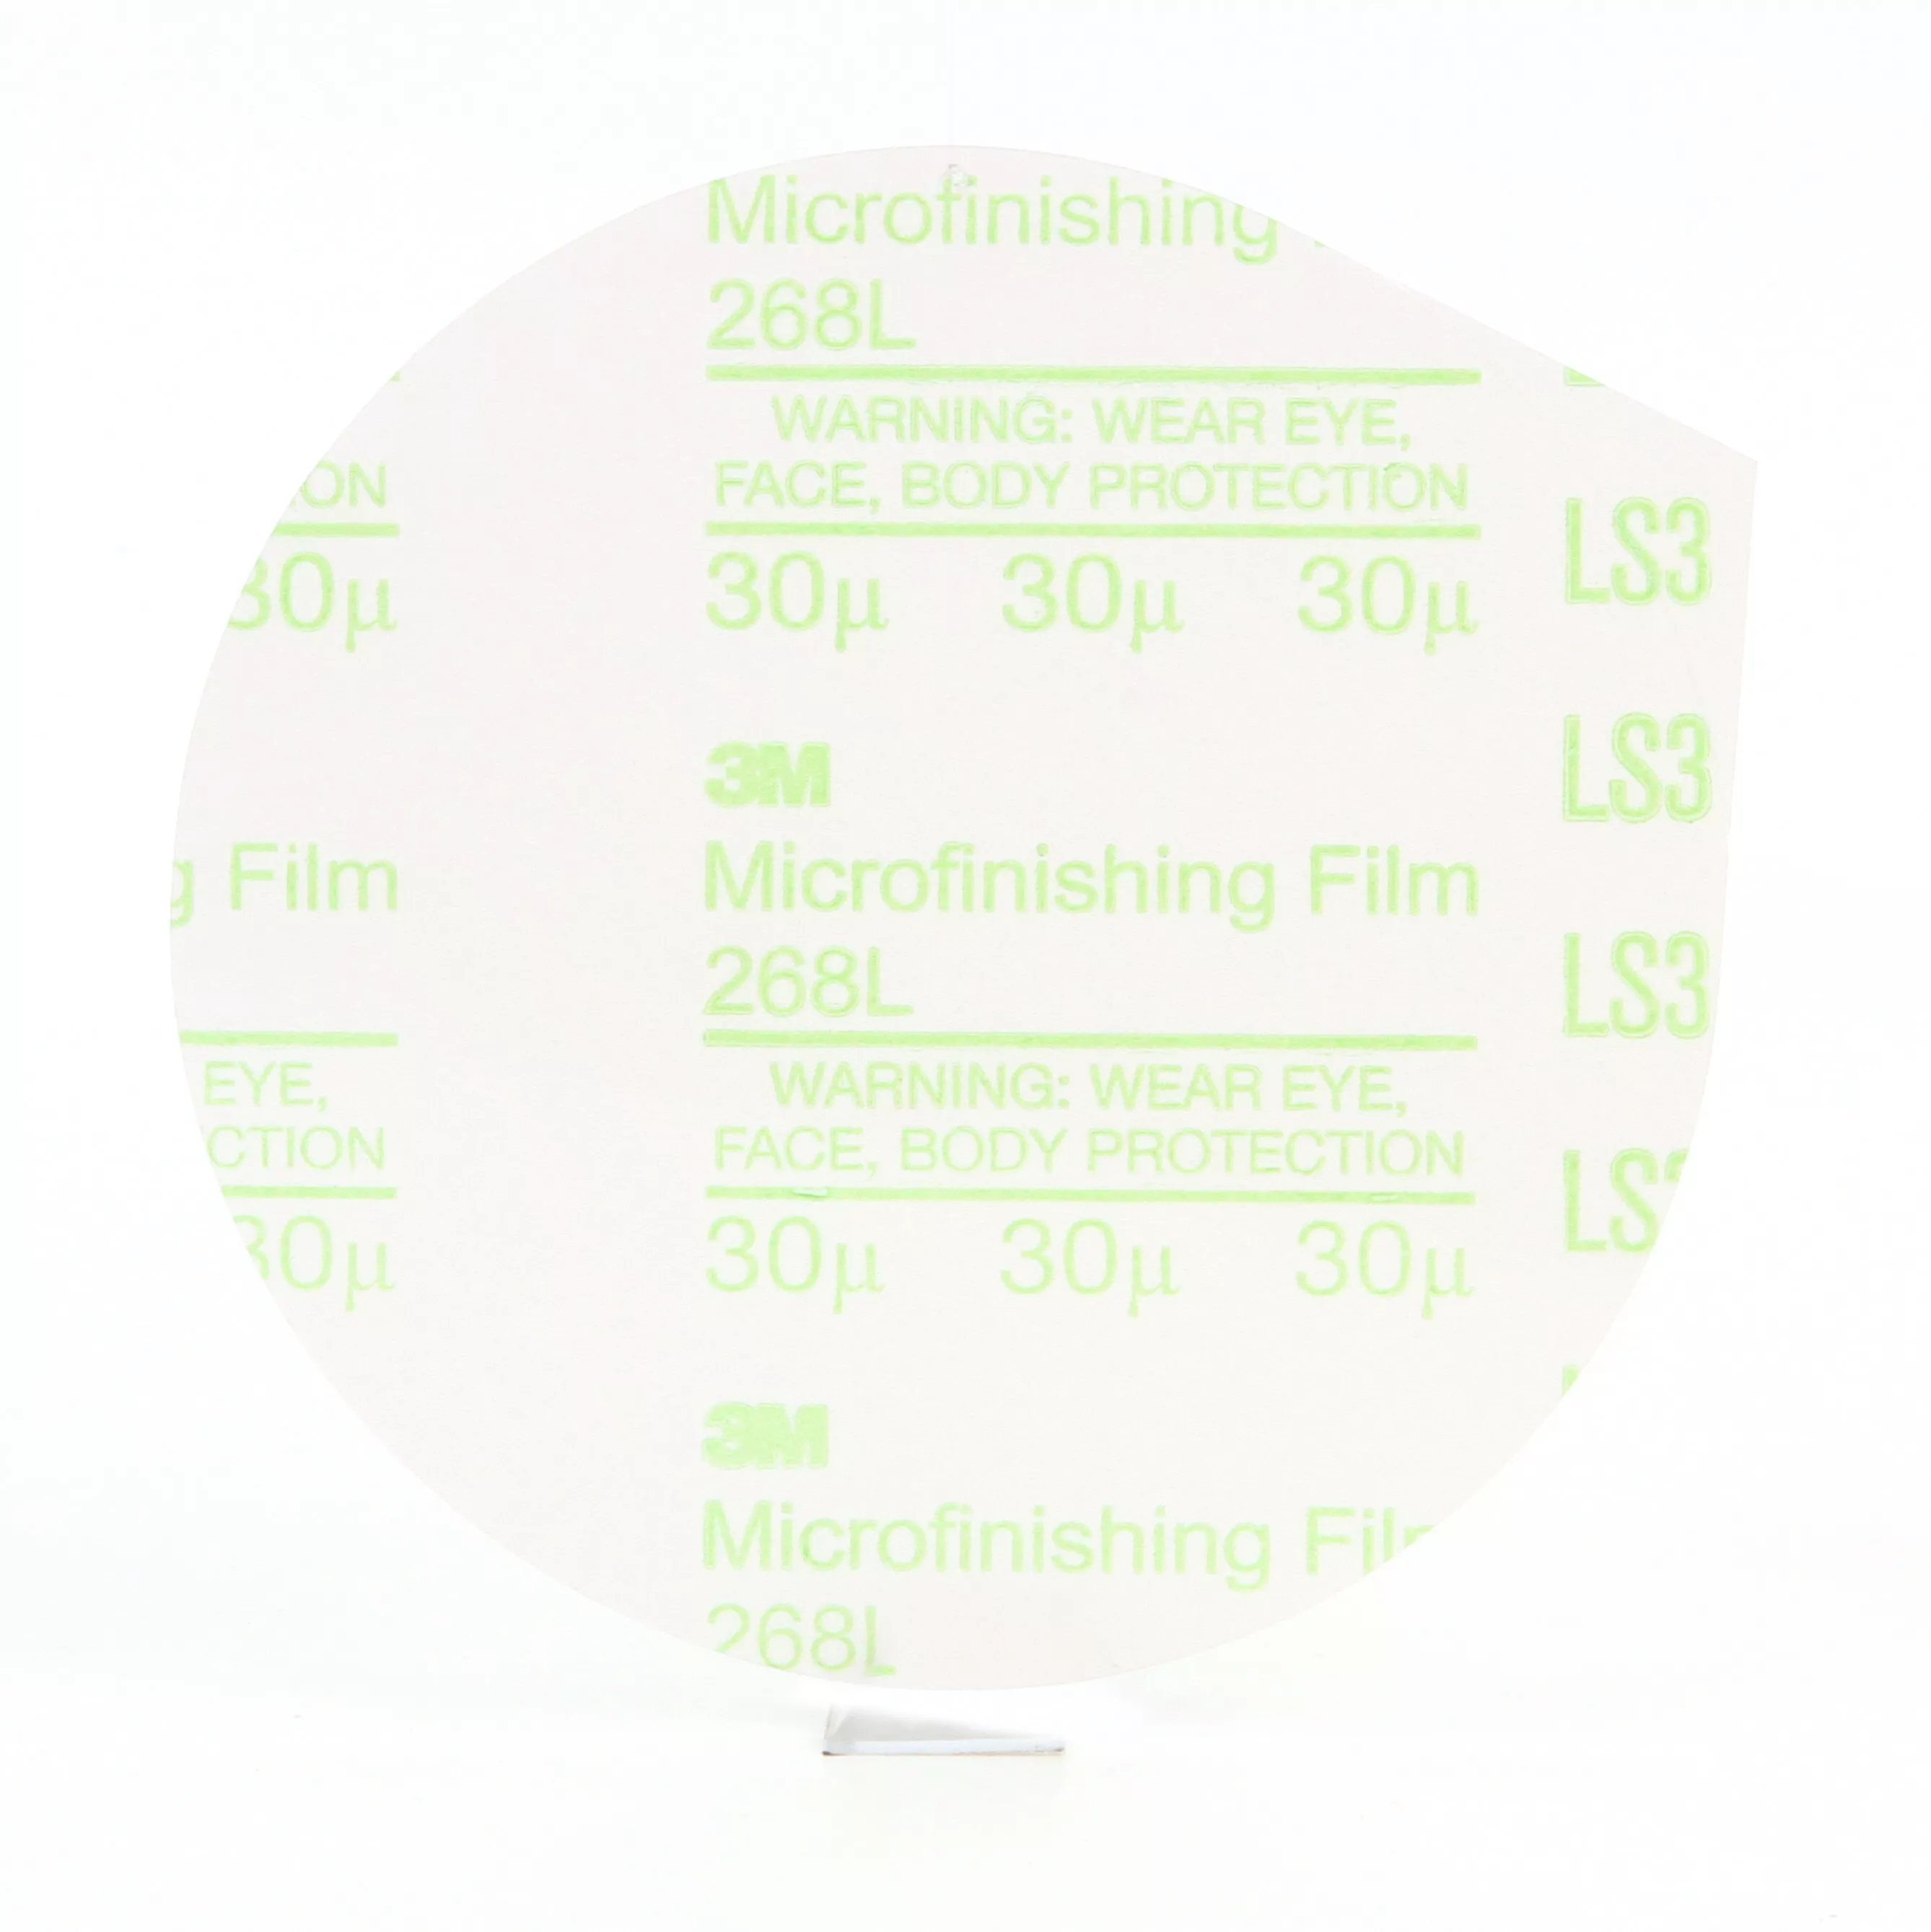 3M™ Microfinishing PSA Film Disc 268L, 30 Mic 3MIL, Type D, 5 in x NH,
Die 500X, 25/Bag, 500 ea/Case